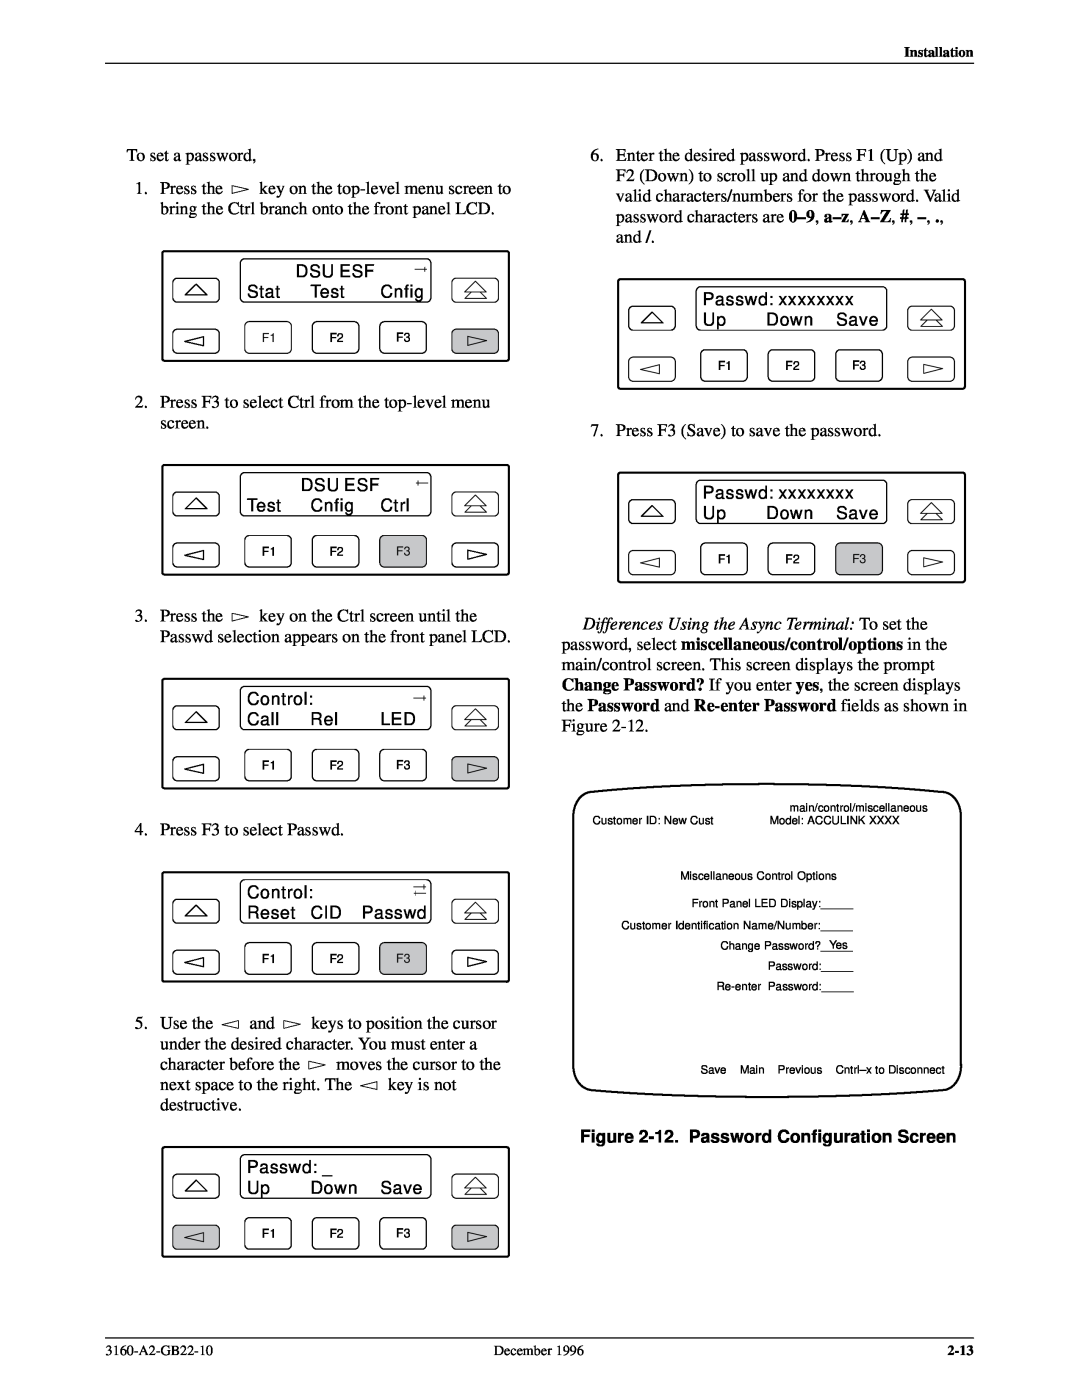 Paradyne 316x manual 12. Password Configuration Screen, main/control/miscellaneous 